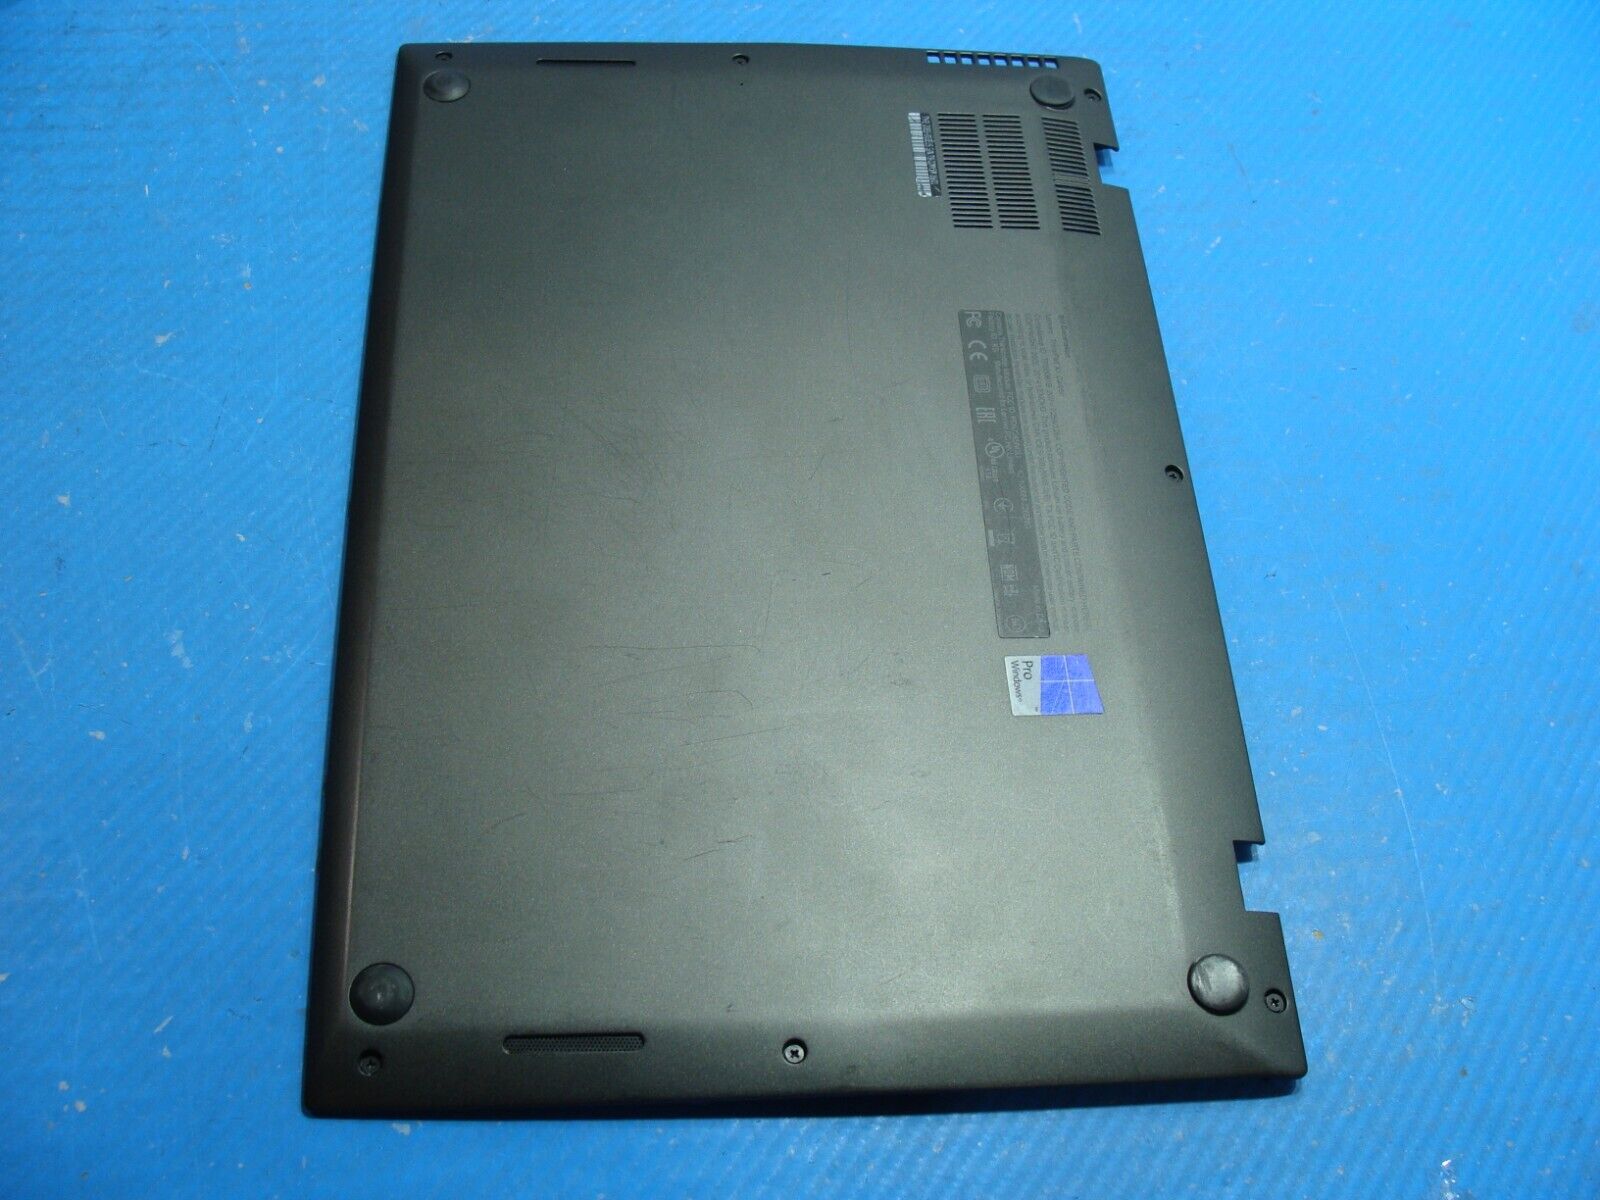 Lenovo ThinkPad X1 Carbon 3rd Gen 14